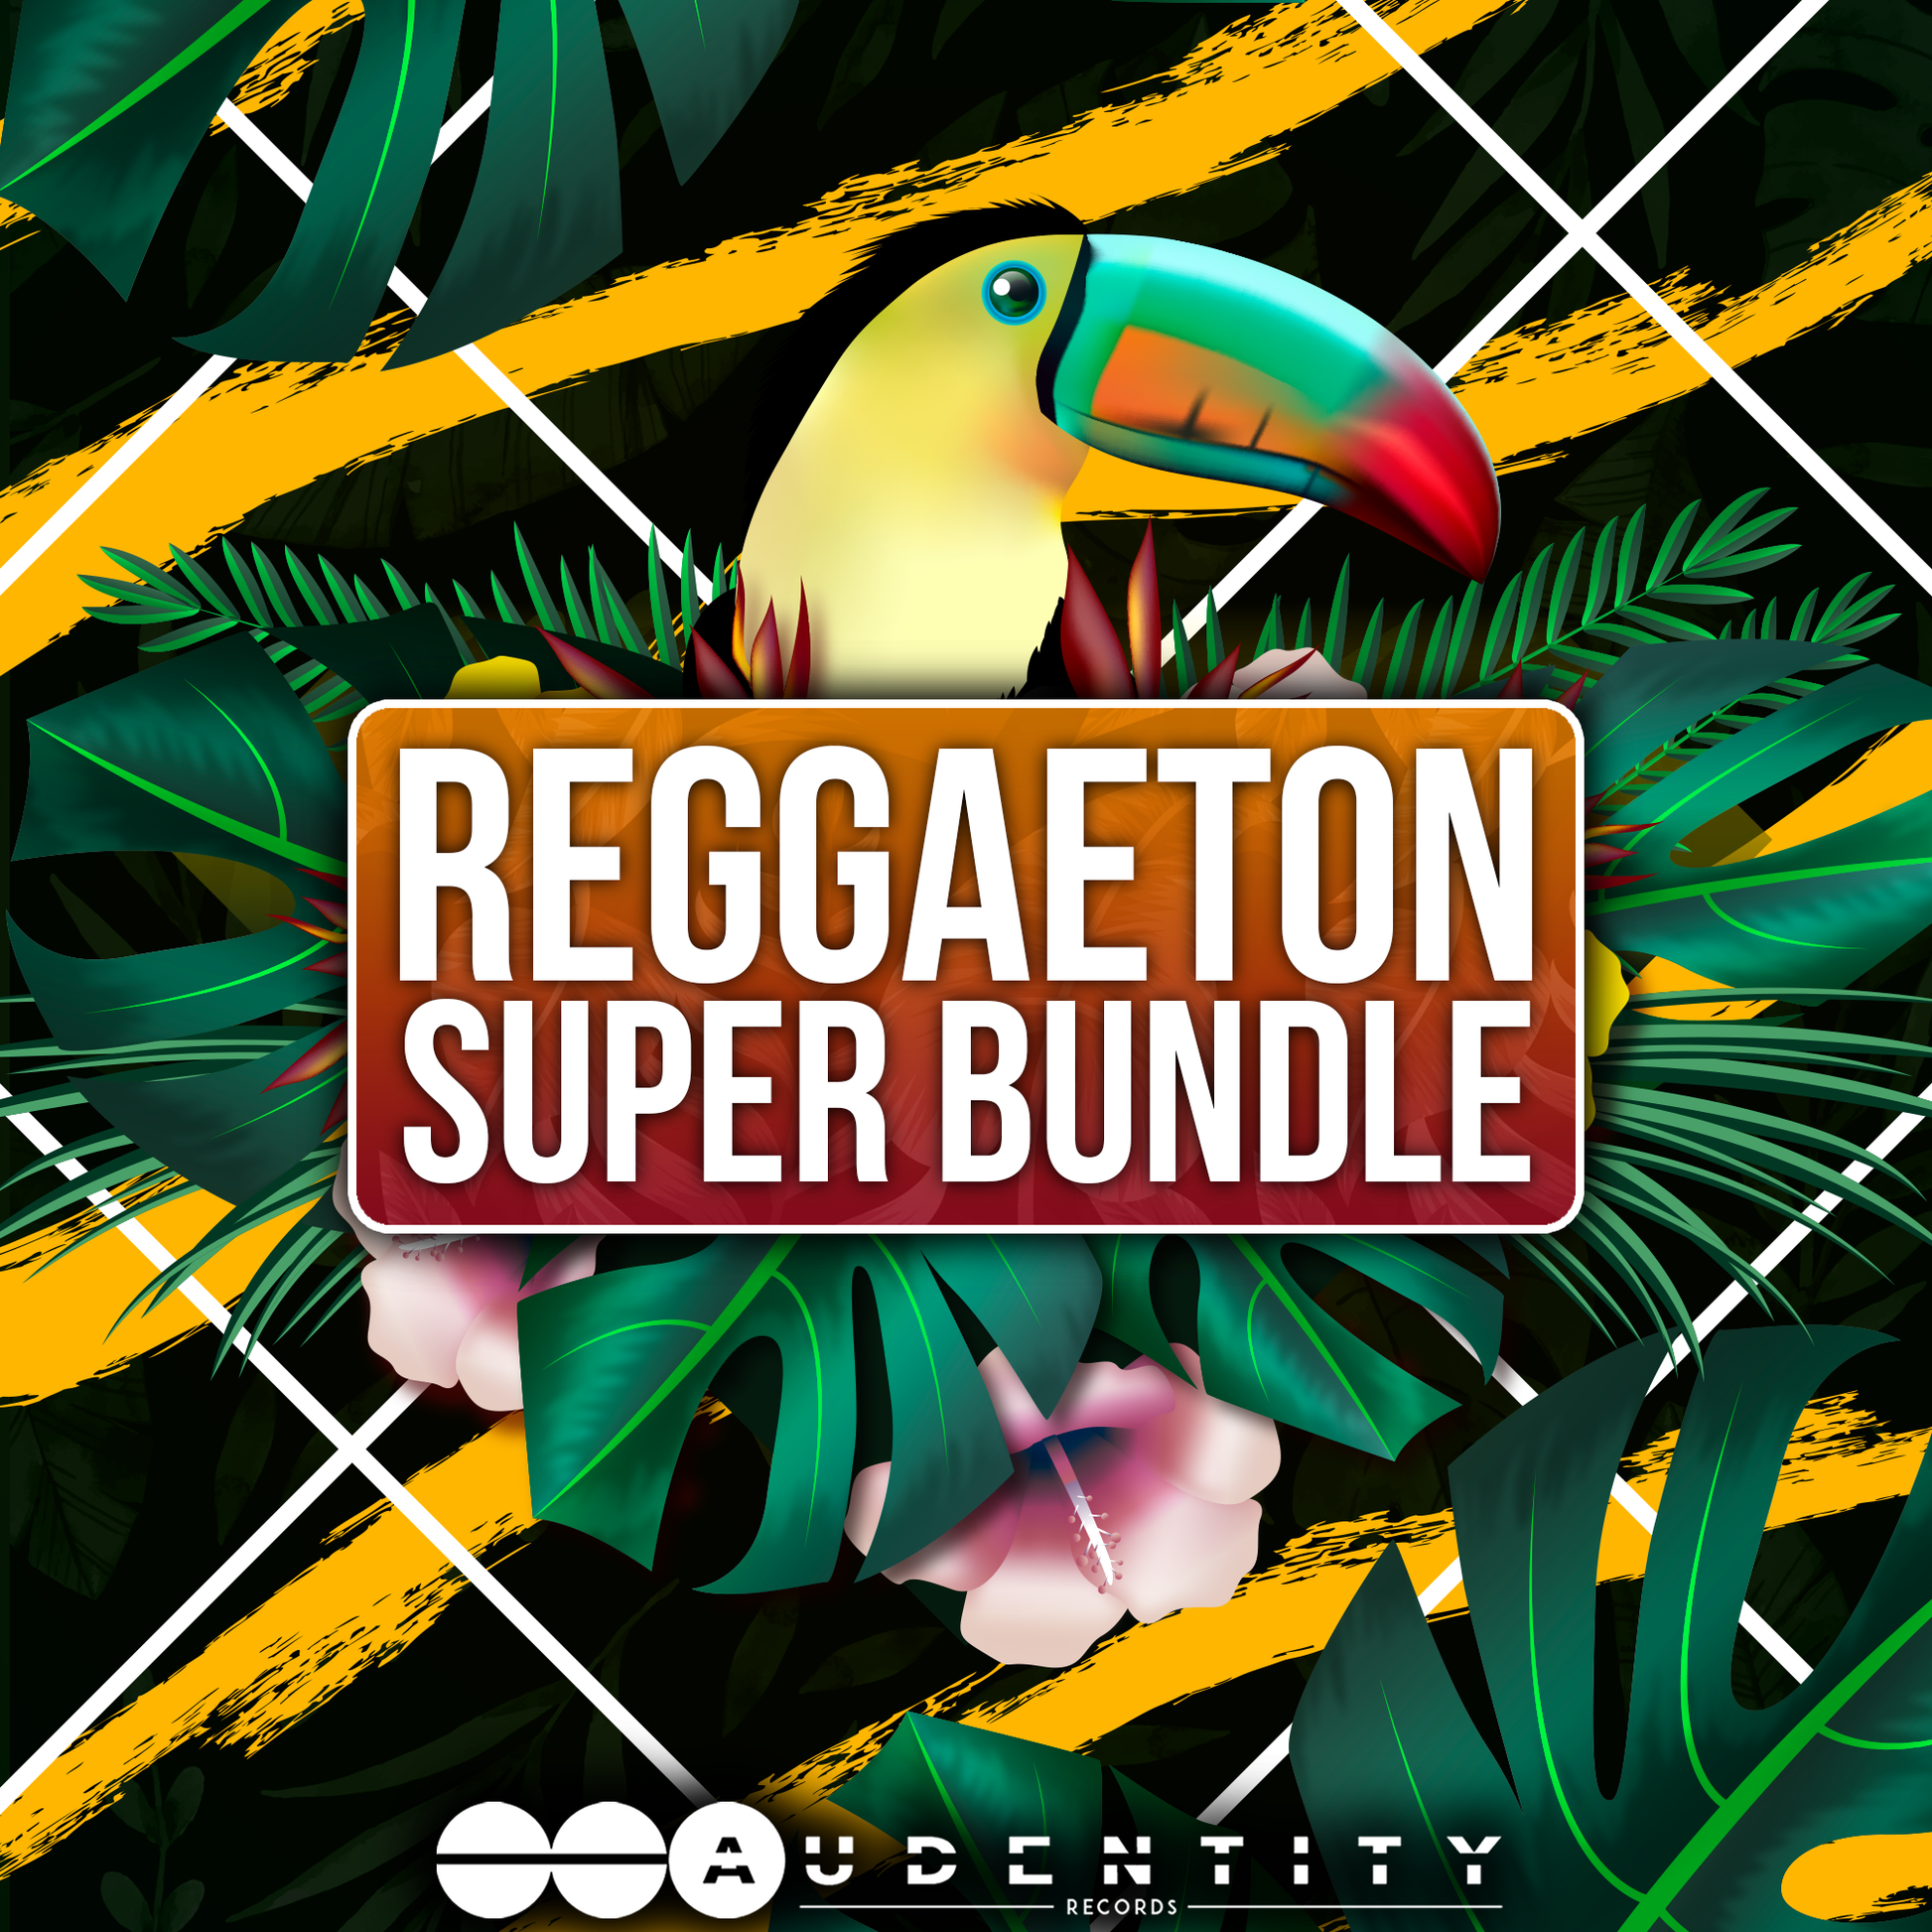 Reggaeton Super Bundle - Audentity Records | Samplestore